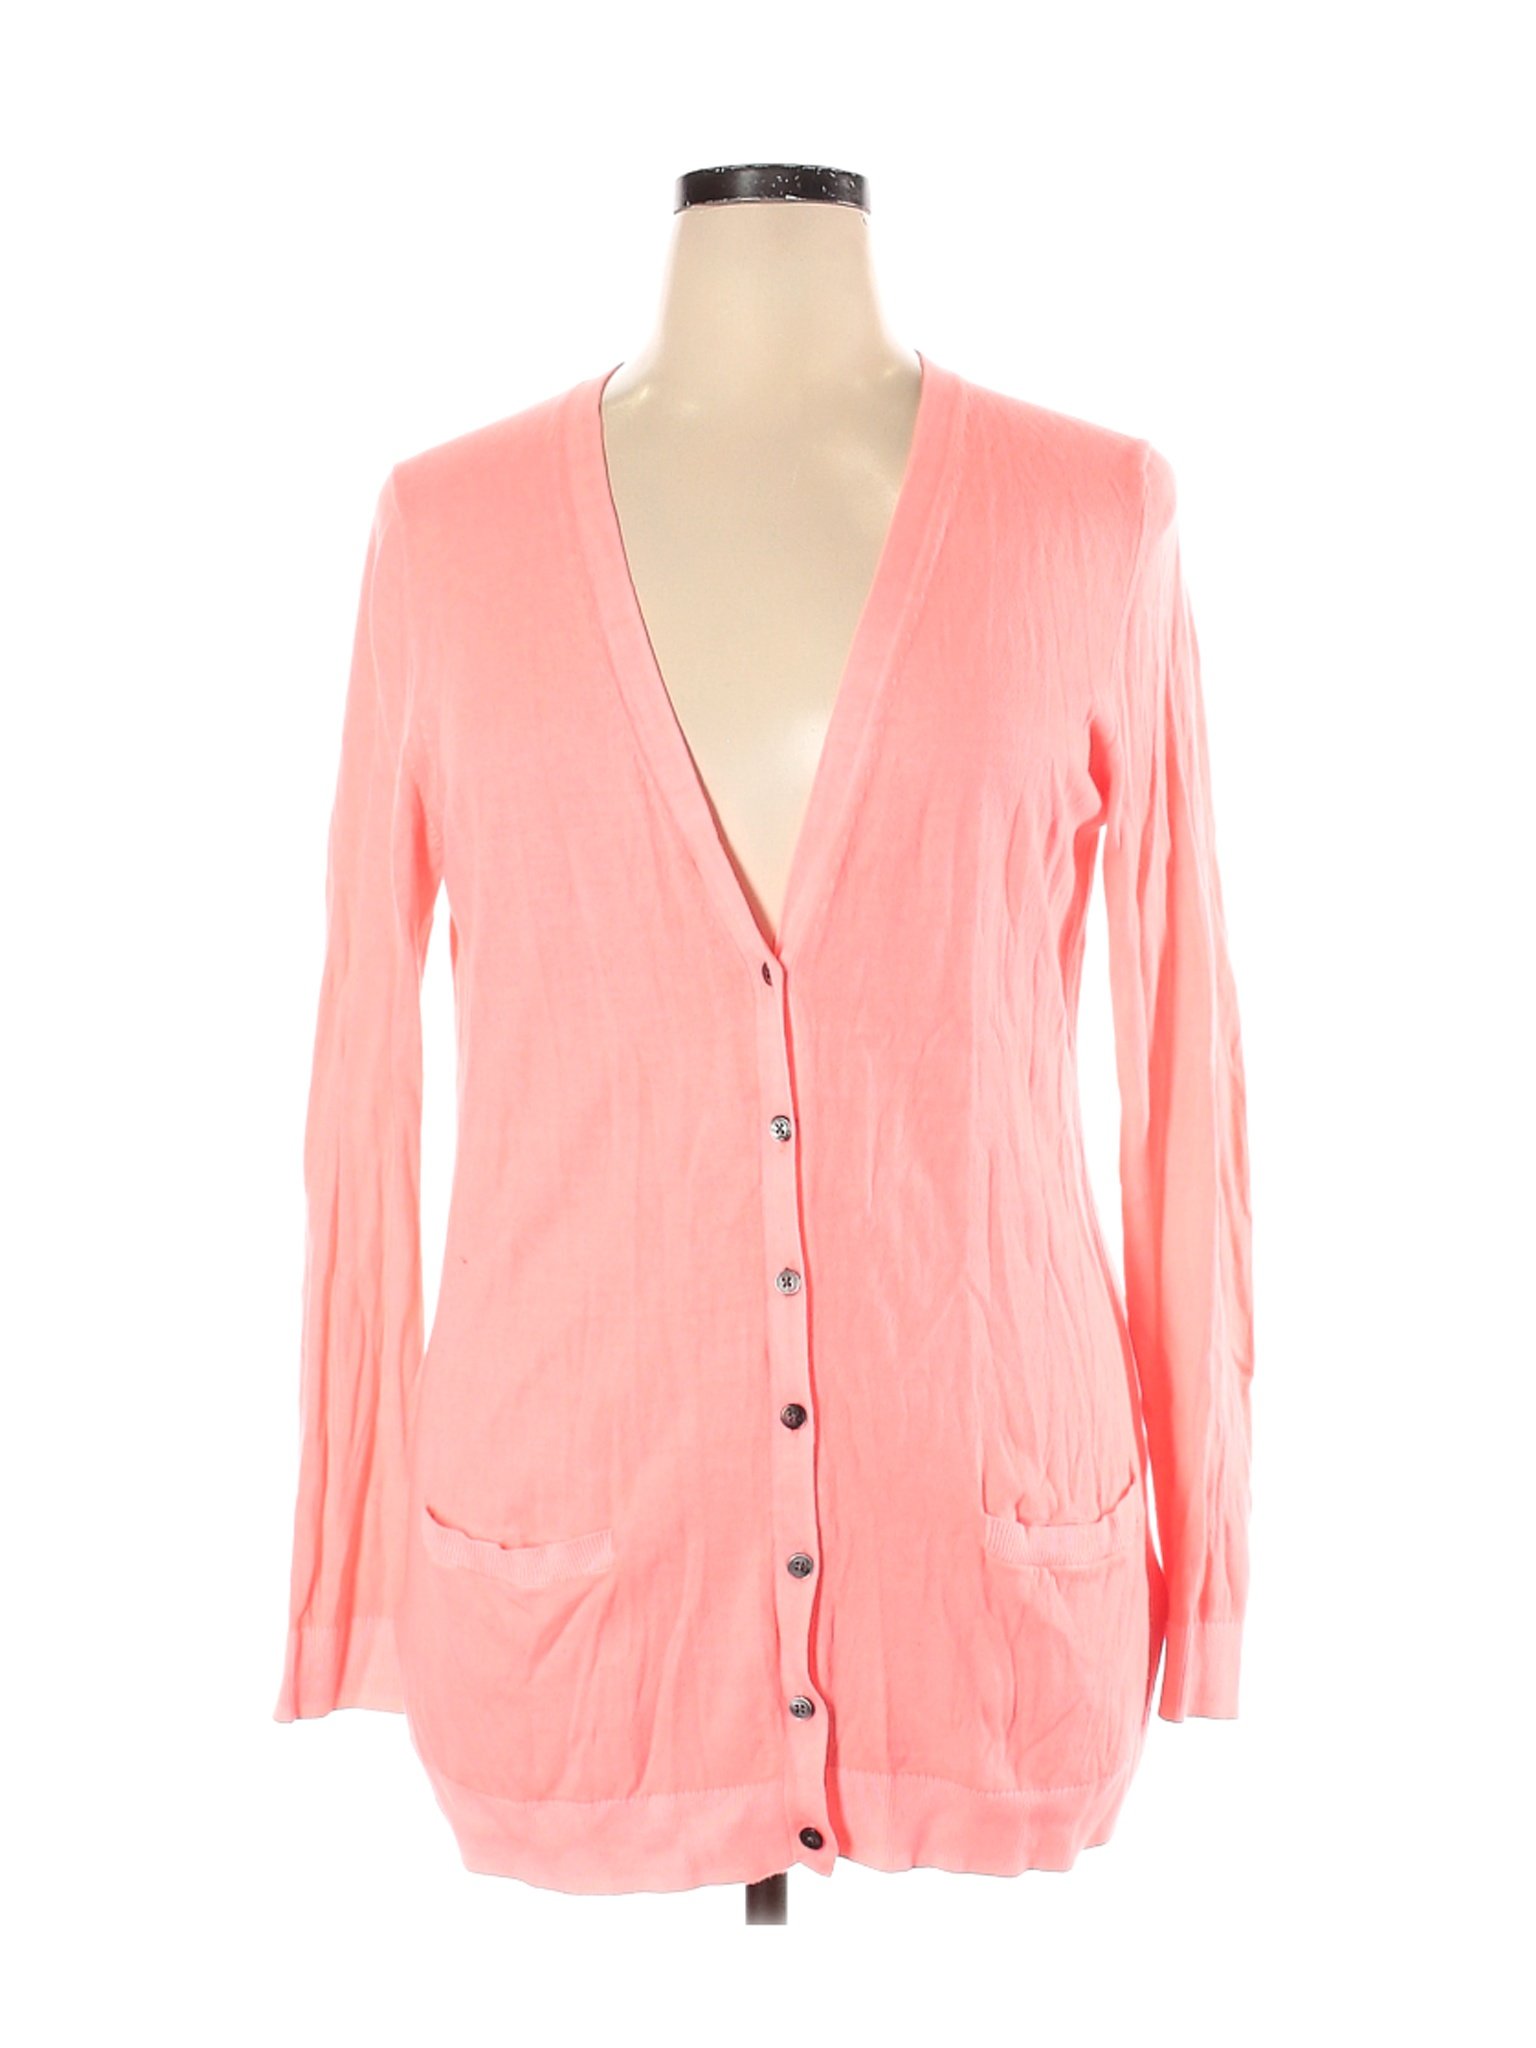 Gap Women Pink Cardigan XL | eBay